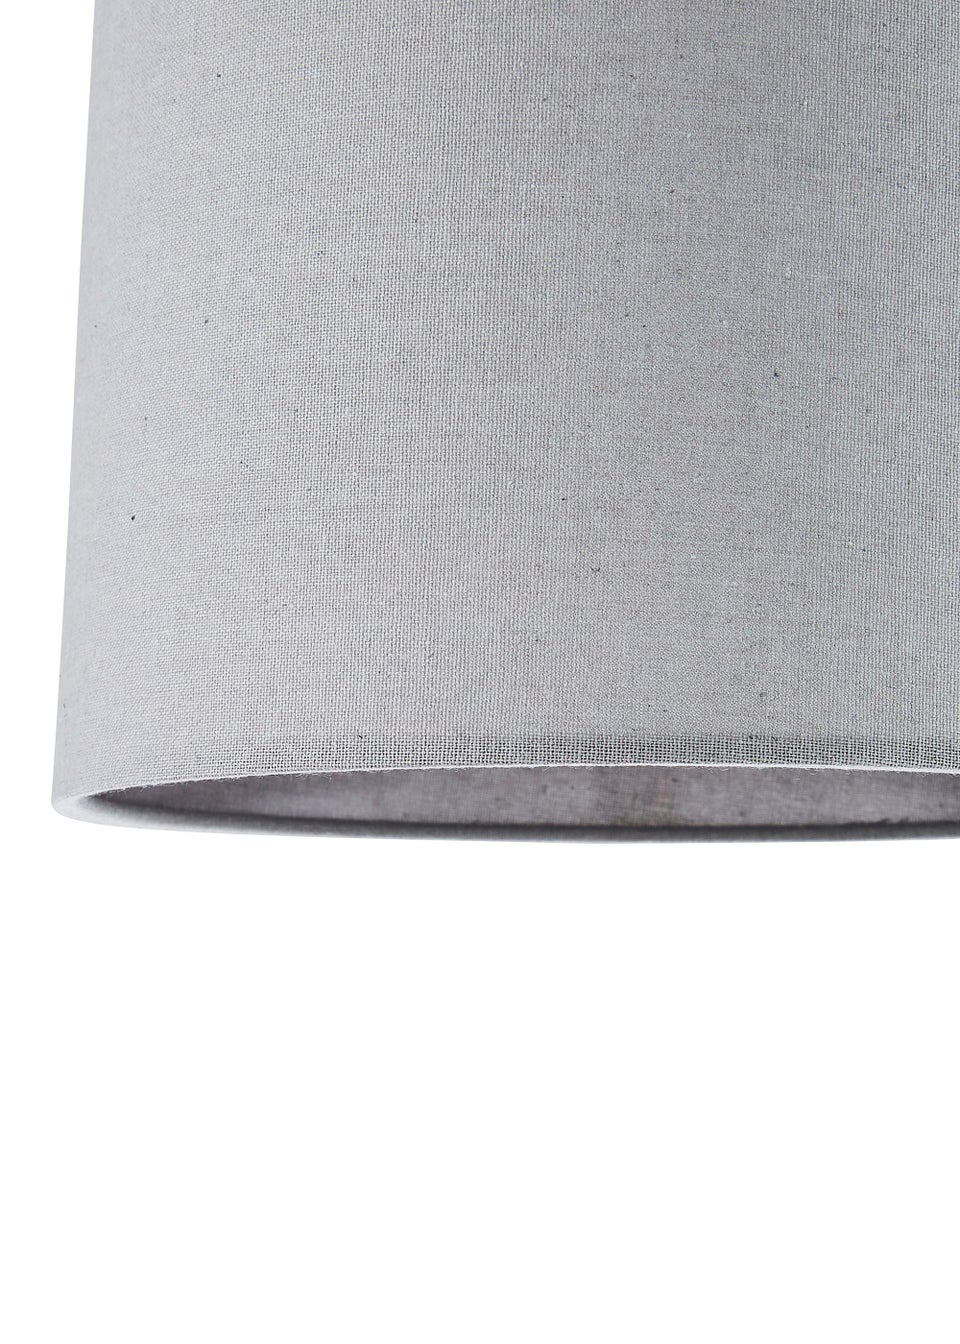 BHS Mira Linen Easyfit Shade Grey (19cm x 25cm)